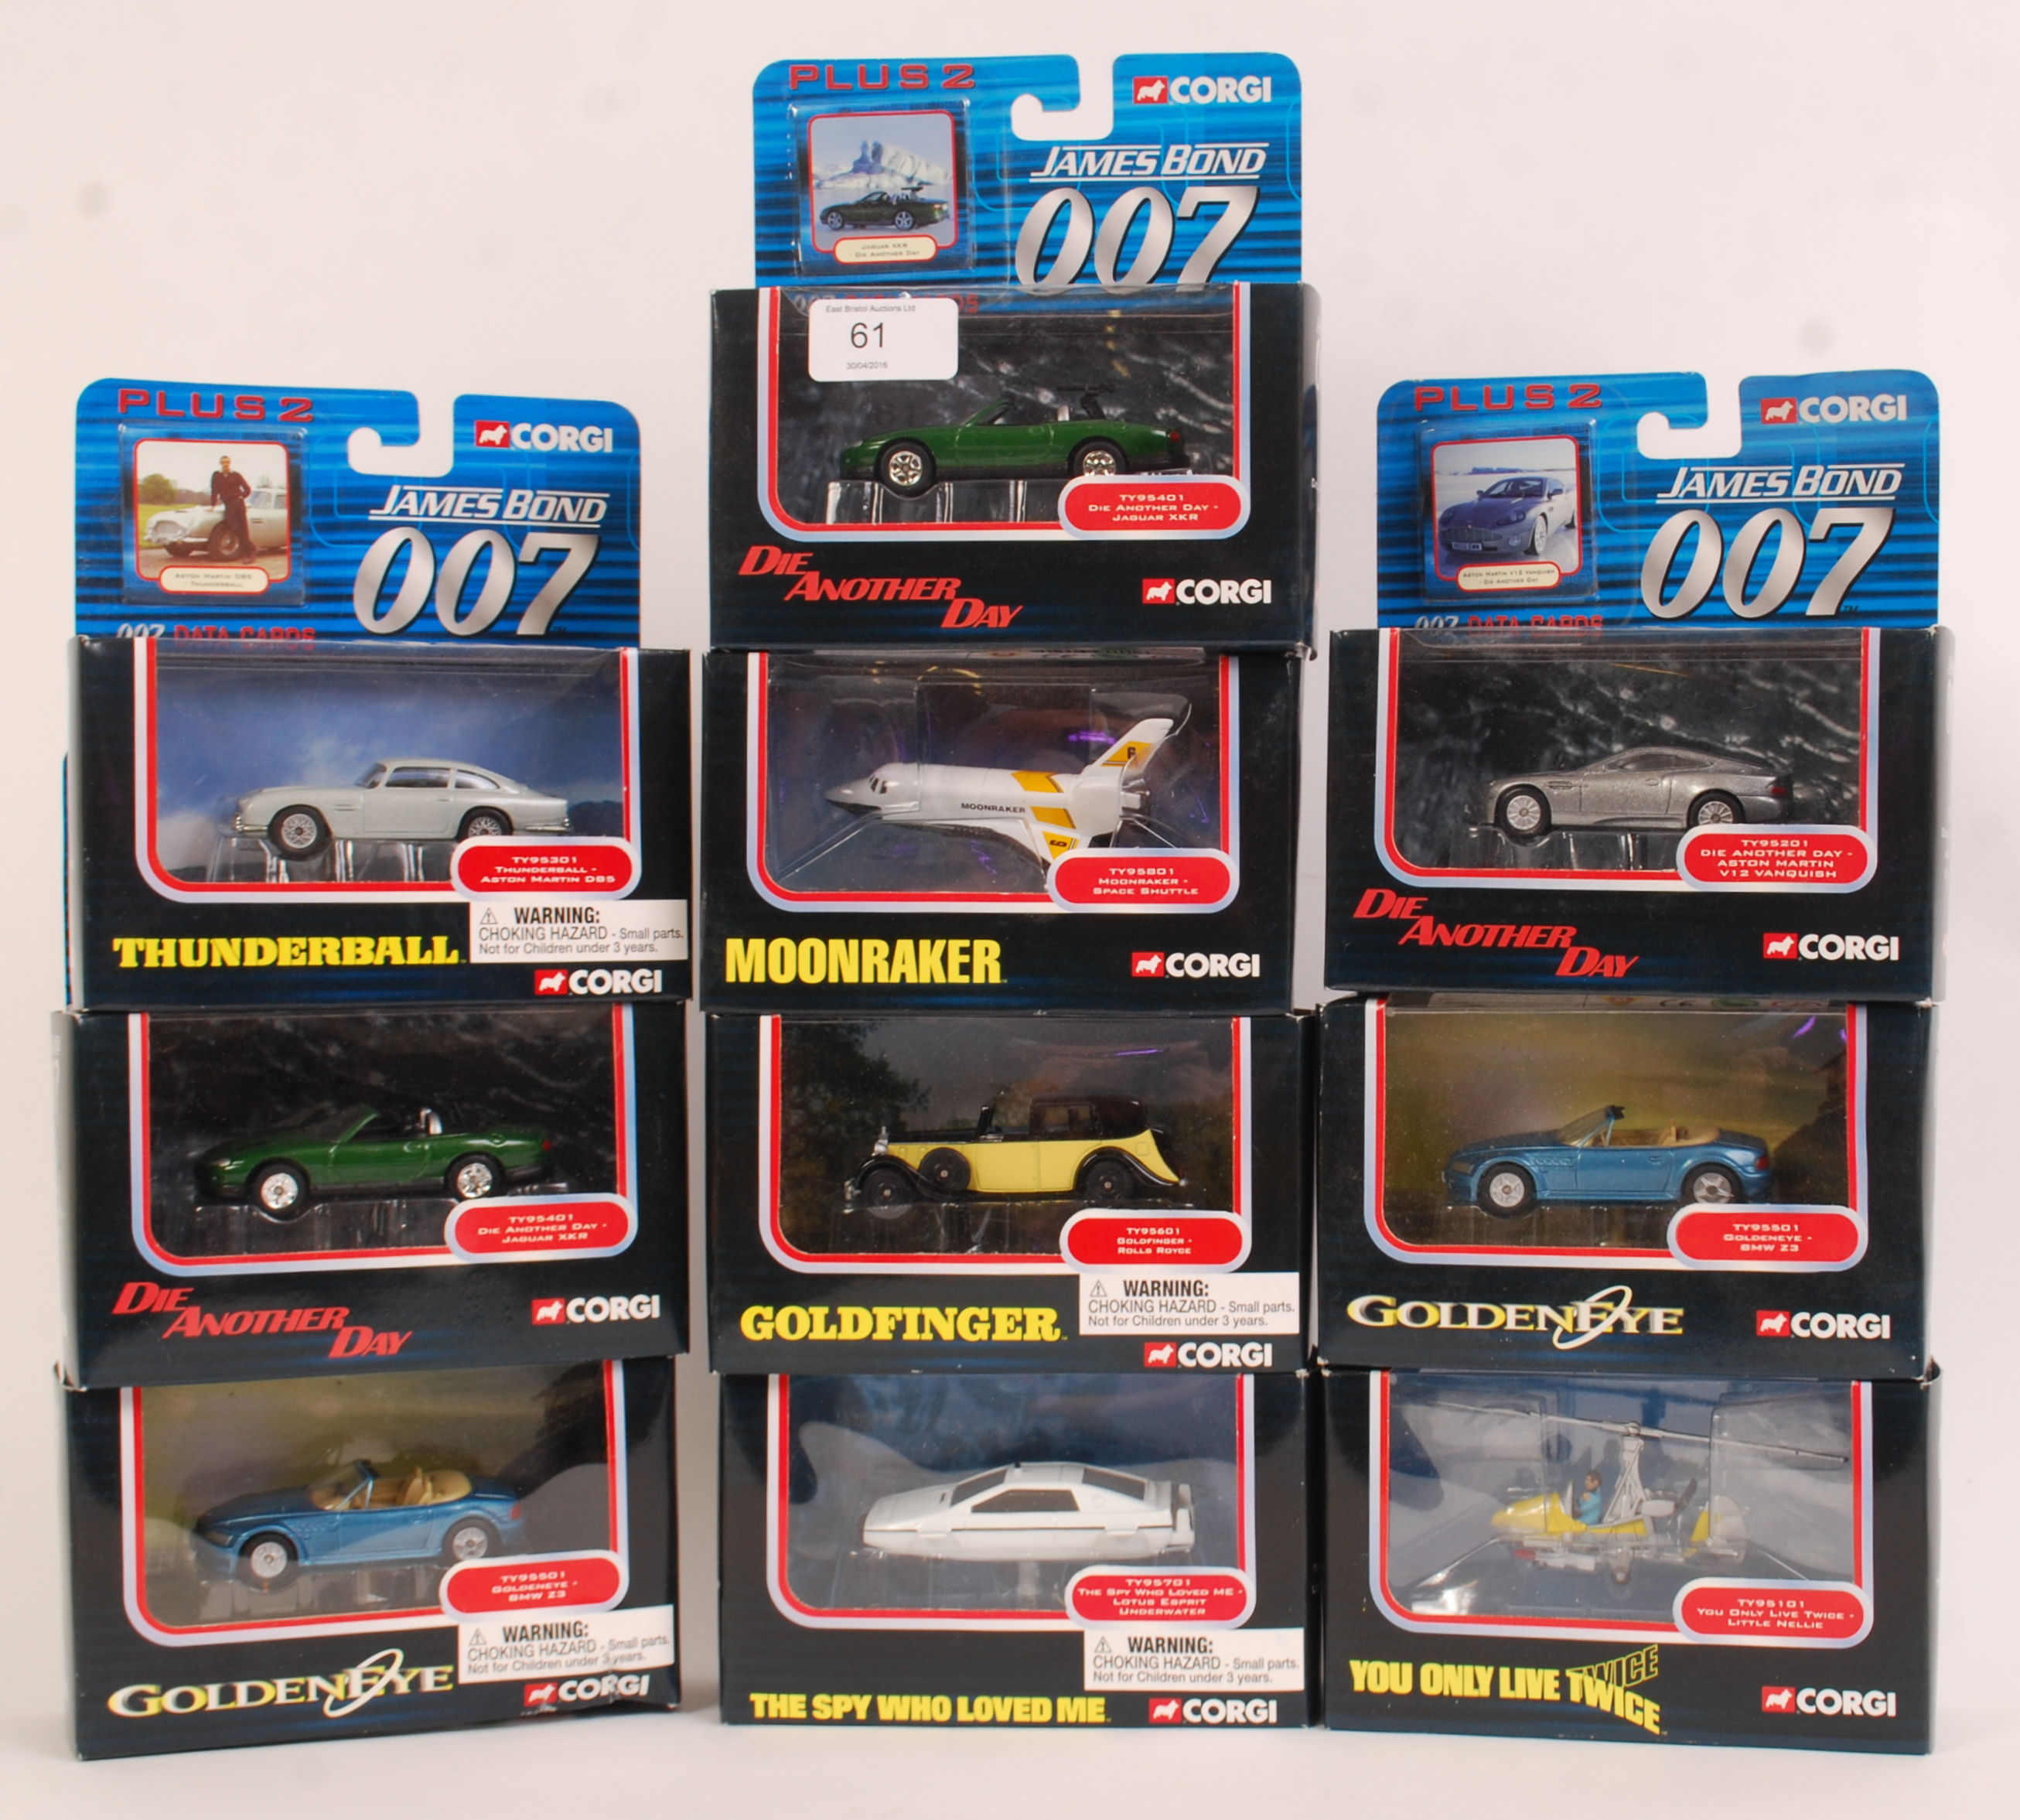 CORGI JAMES BOND: A collection of 10x Corgi James Bond diecast models, all mint, and unused.